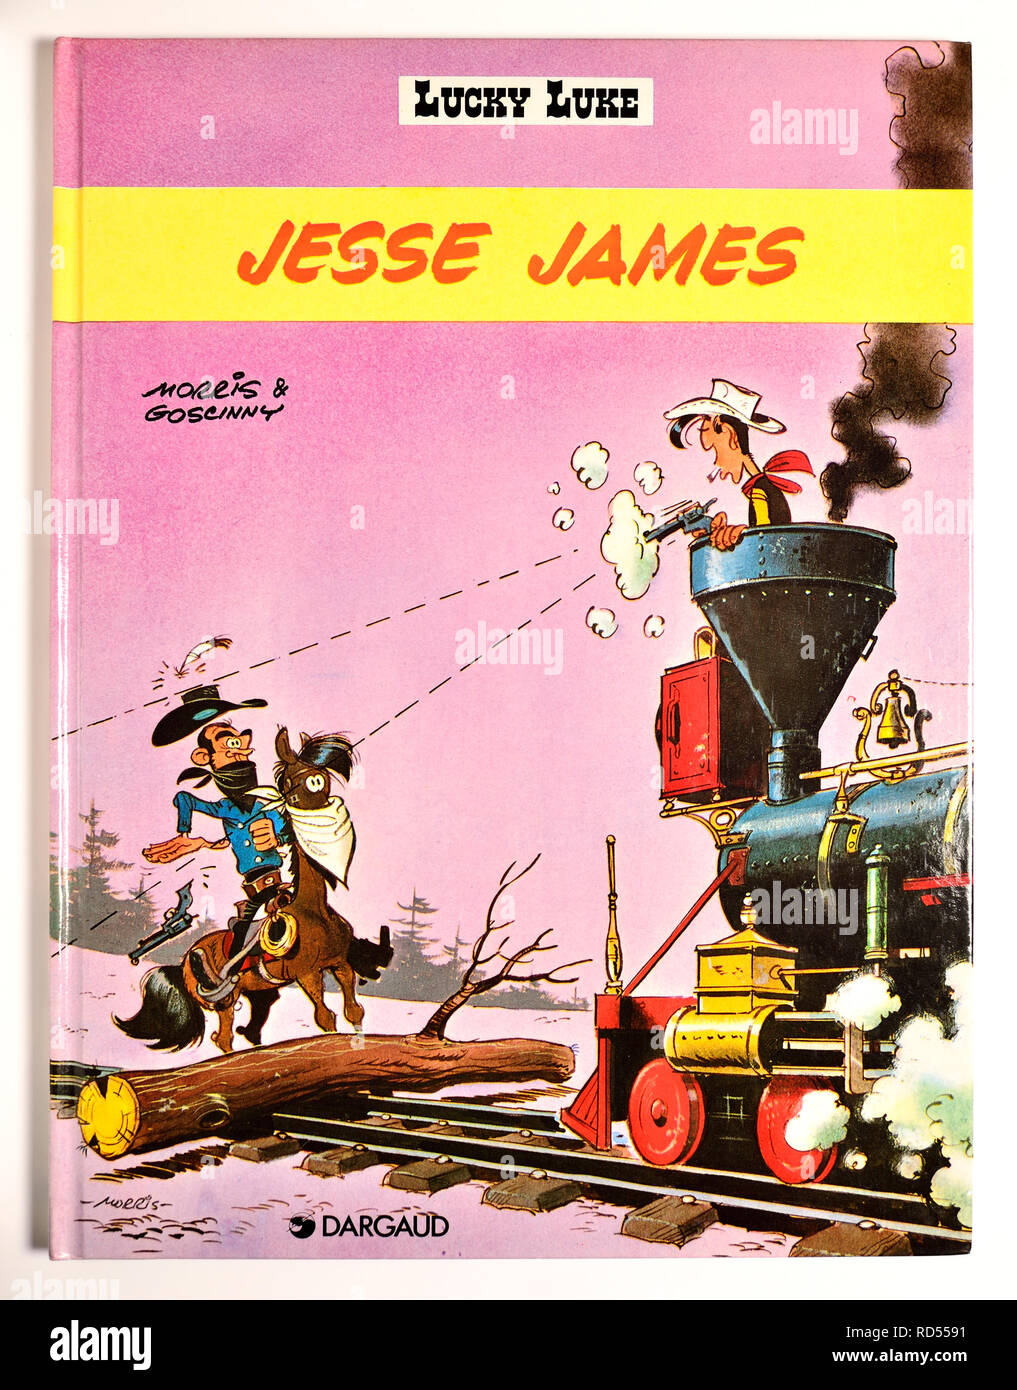 Cómic Lucky Luke - Jesse James Foto de stock